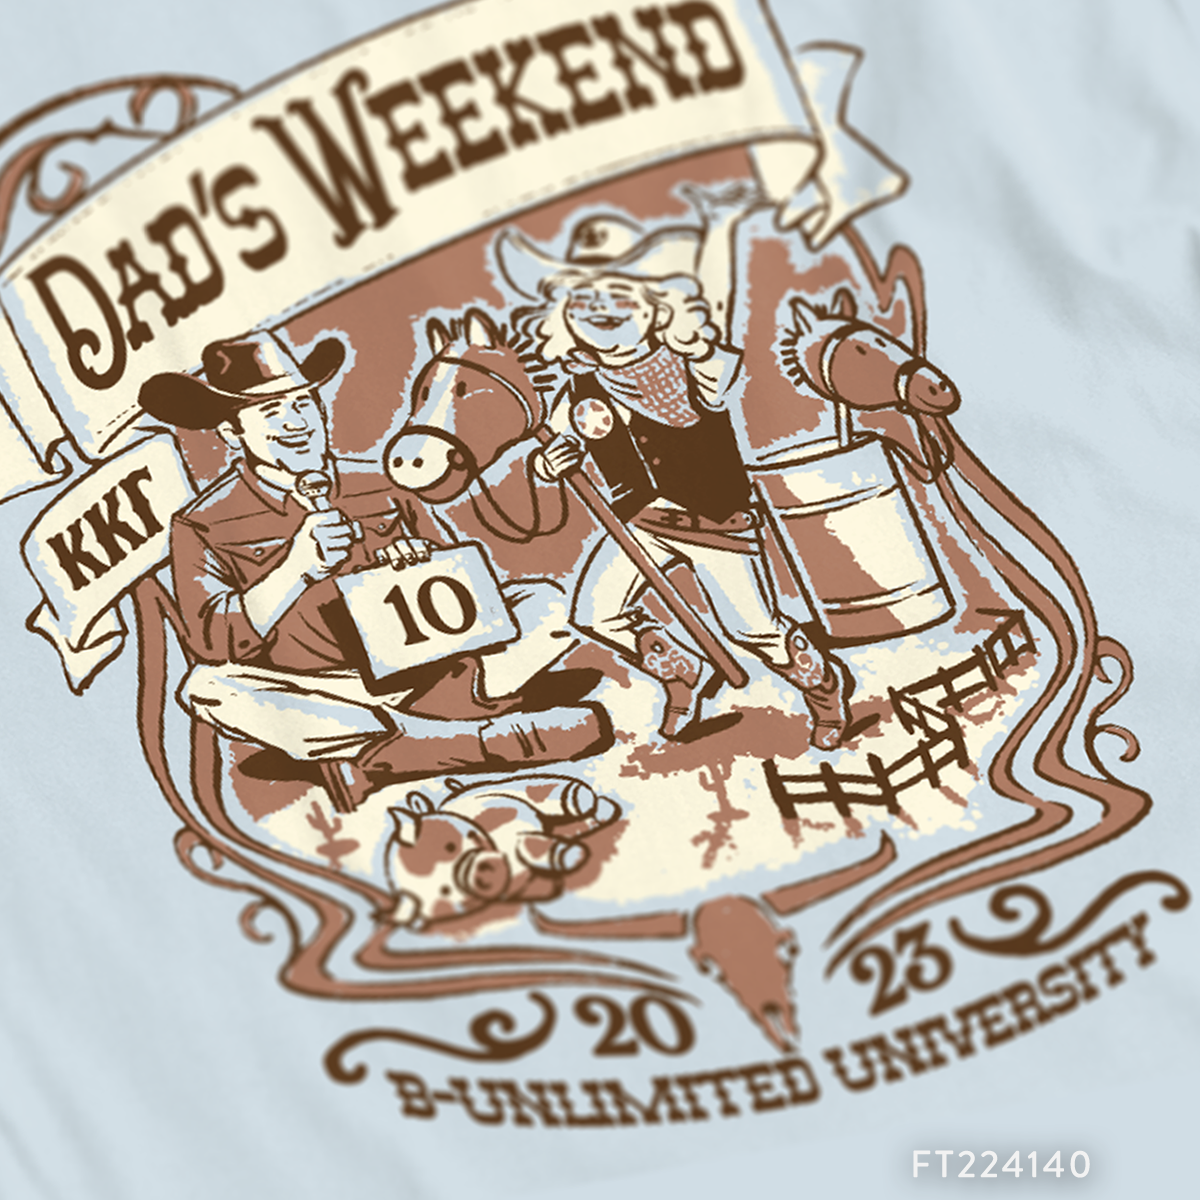 Kappa Kappa Gamma Western Dads Weekend T-Shirt Design